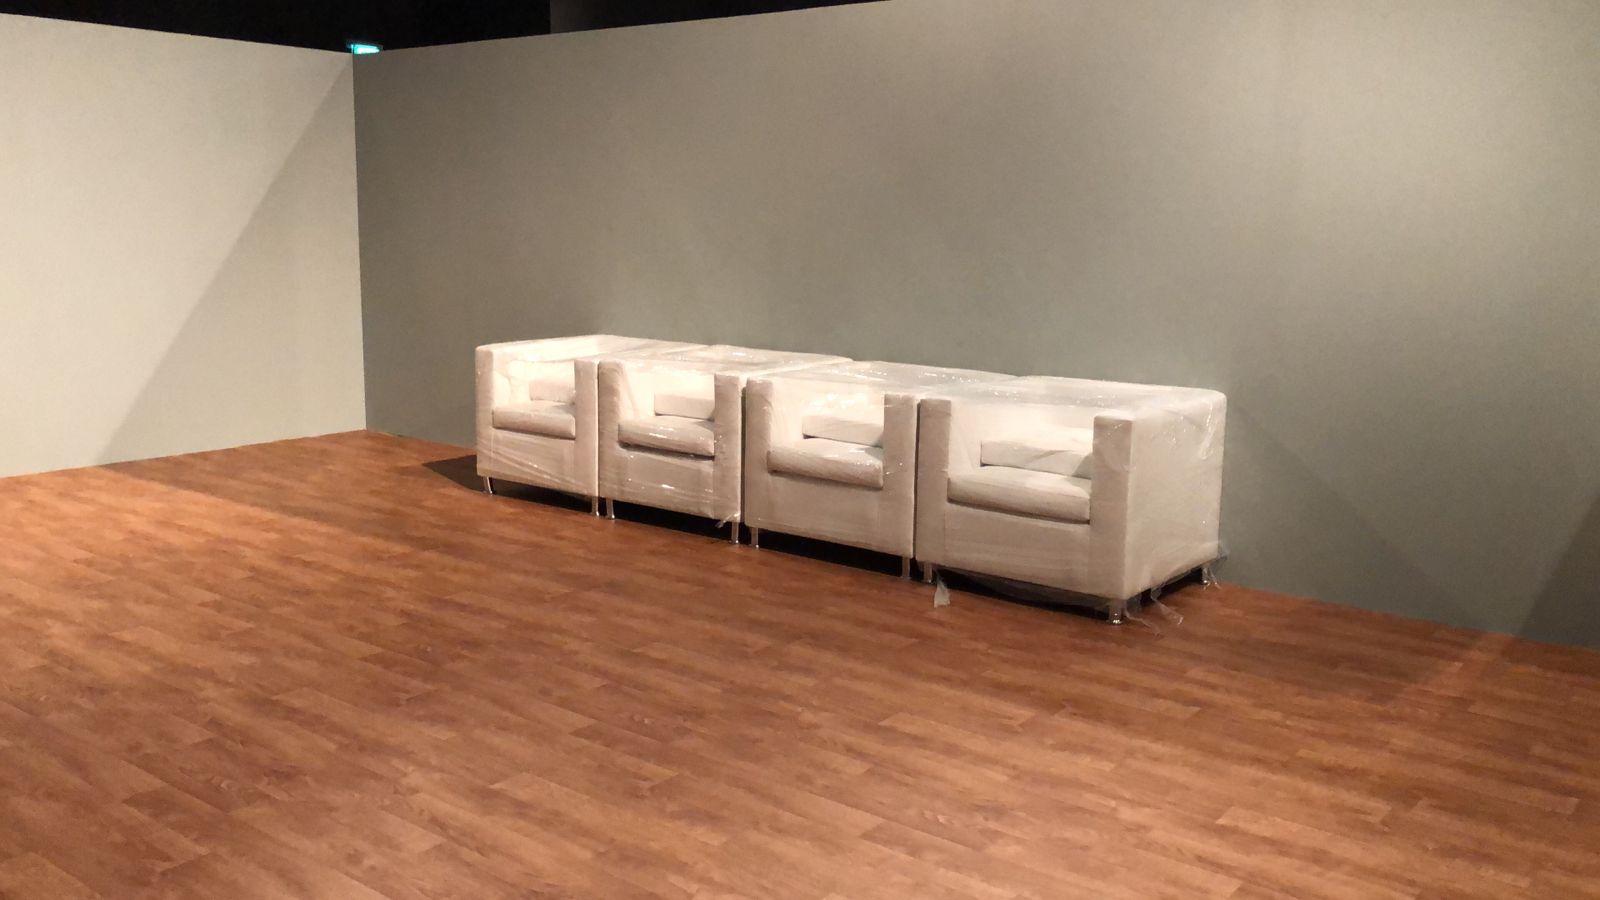 single sofas for an event in dubai